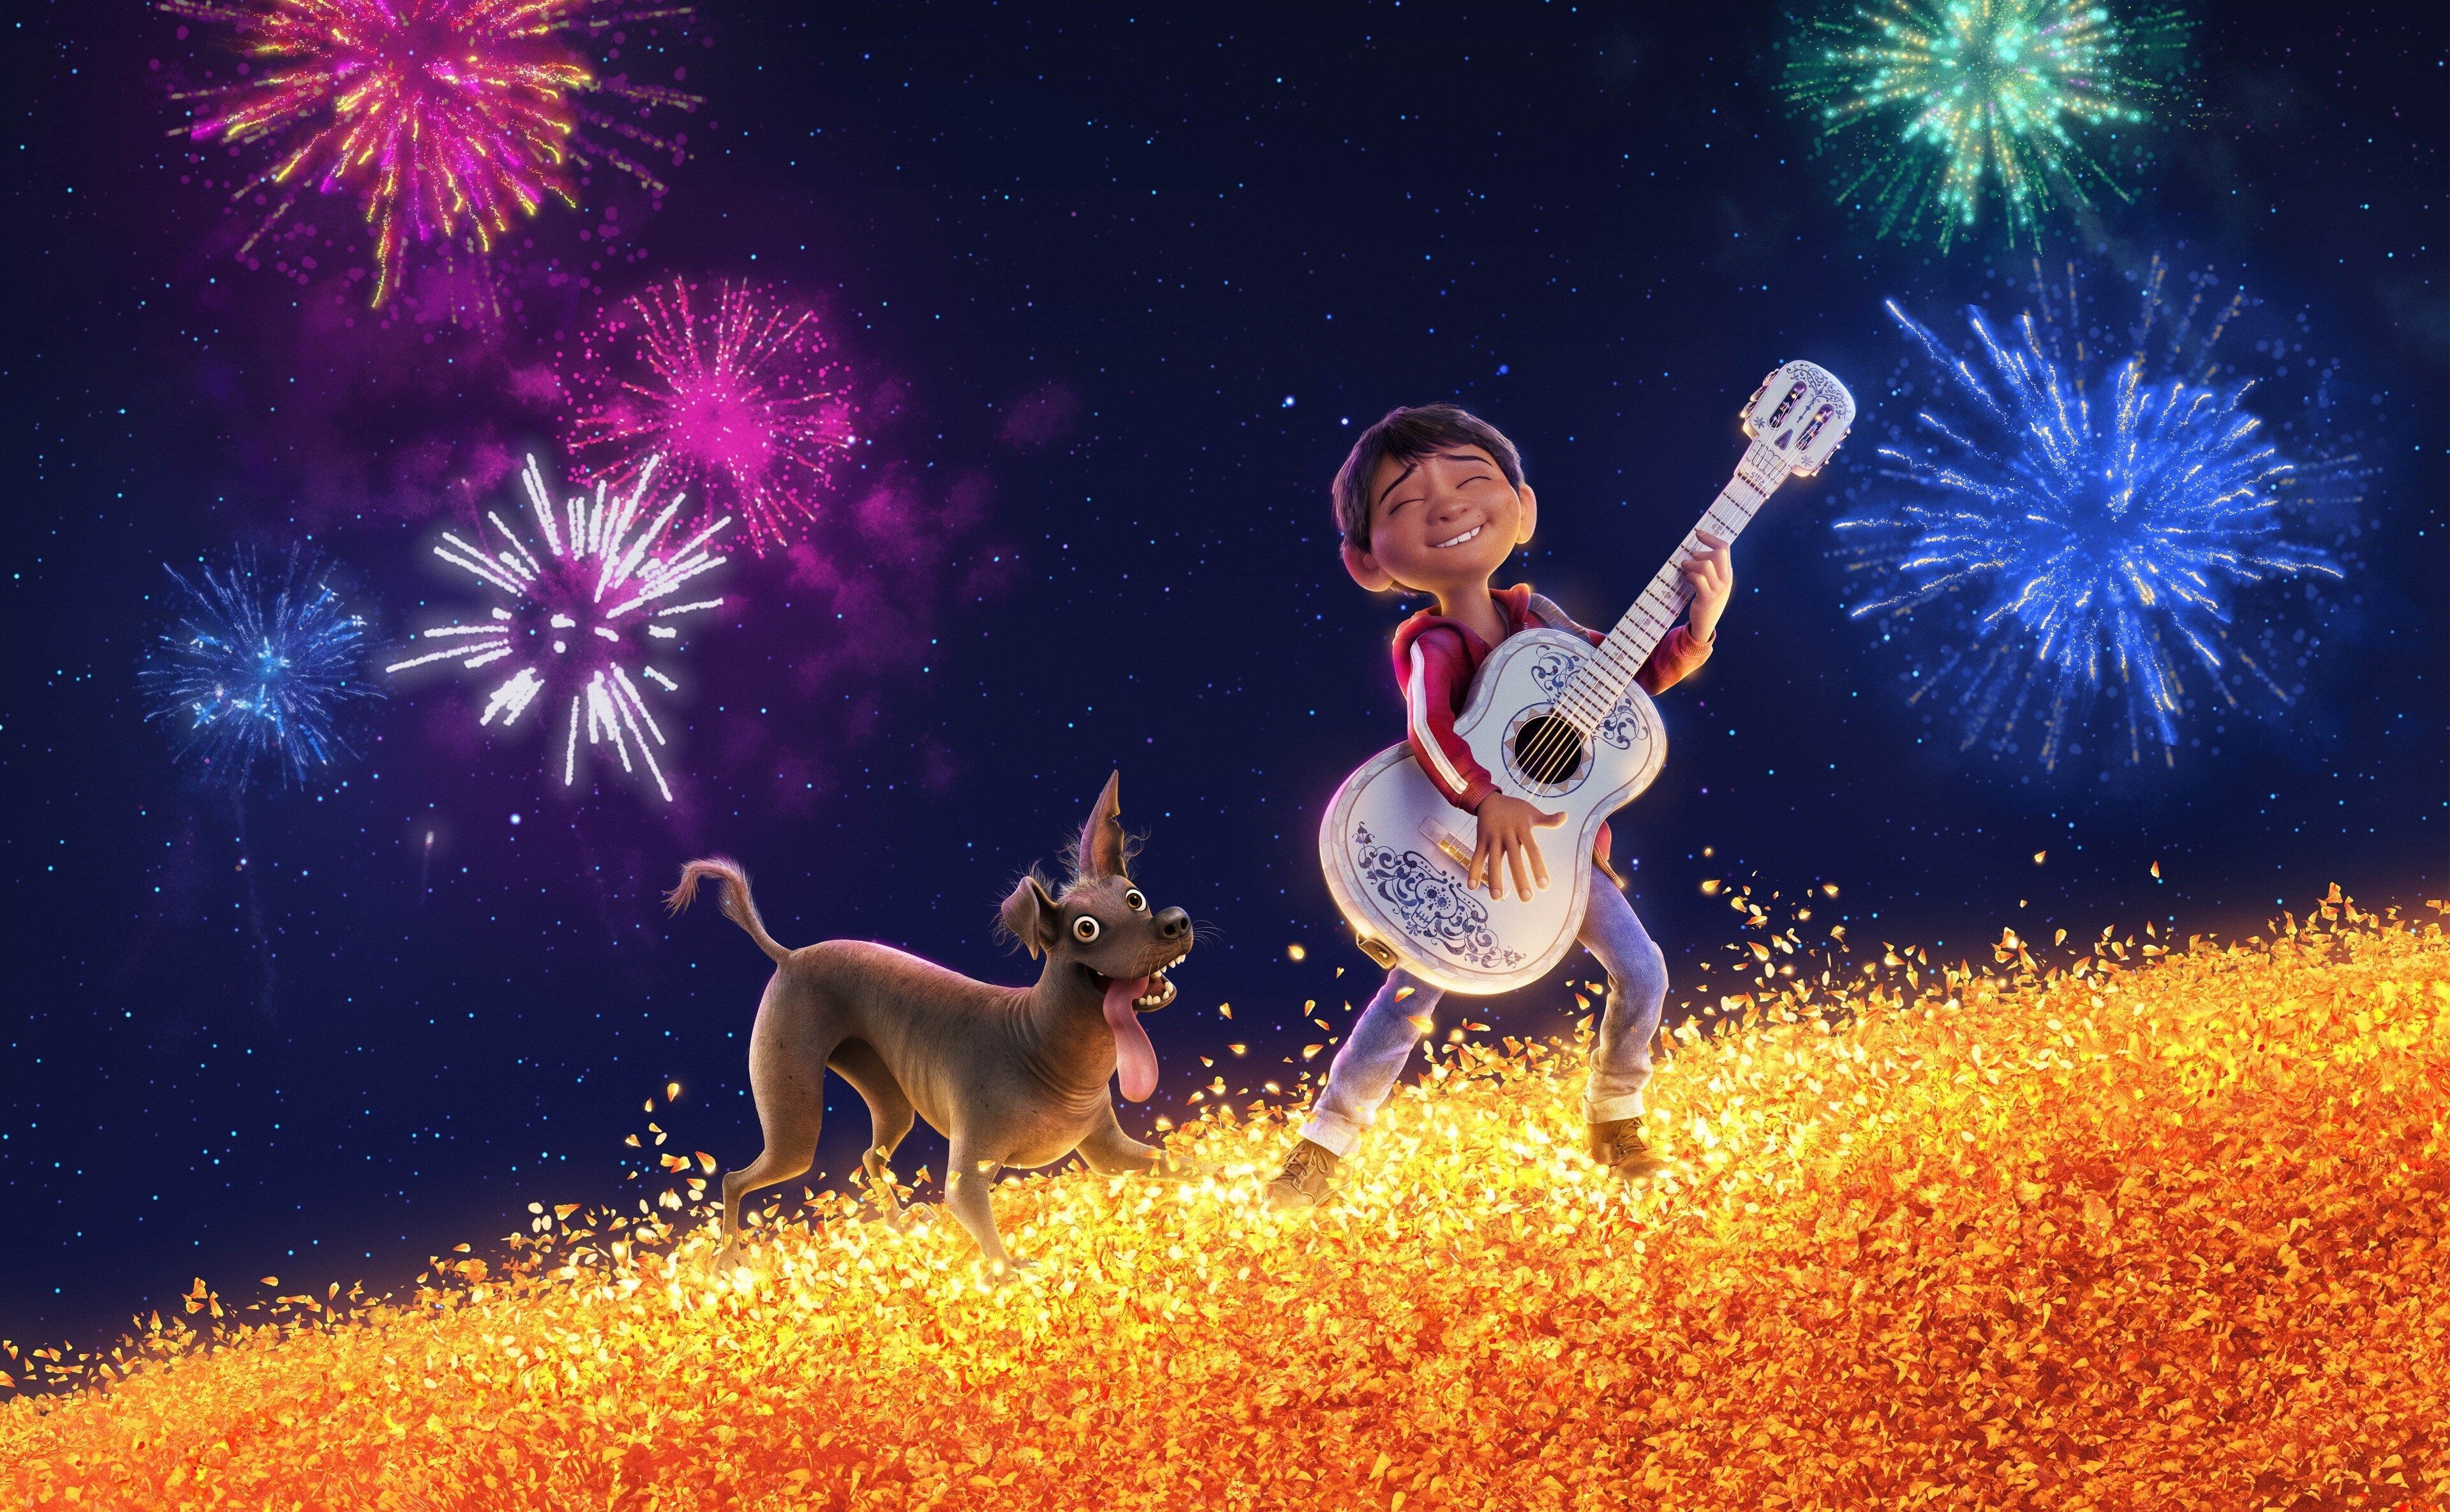 coco 4k best wallpaper image. Disney pixar movies, Pixar movies, Coco photo